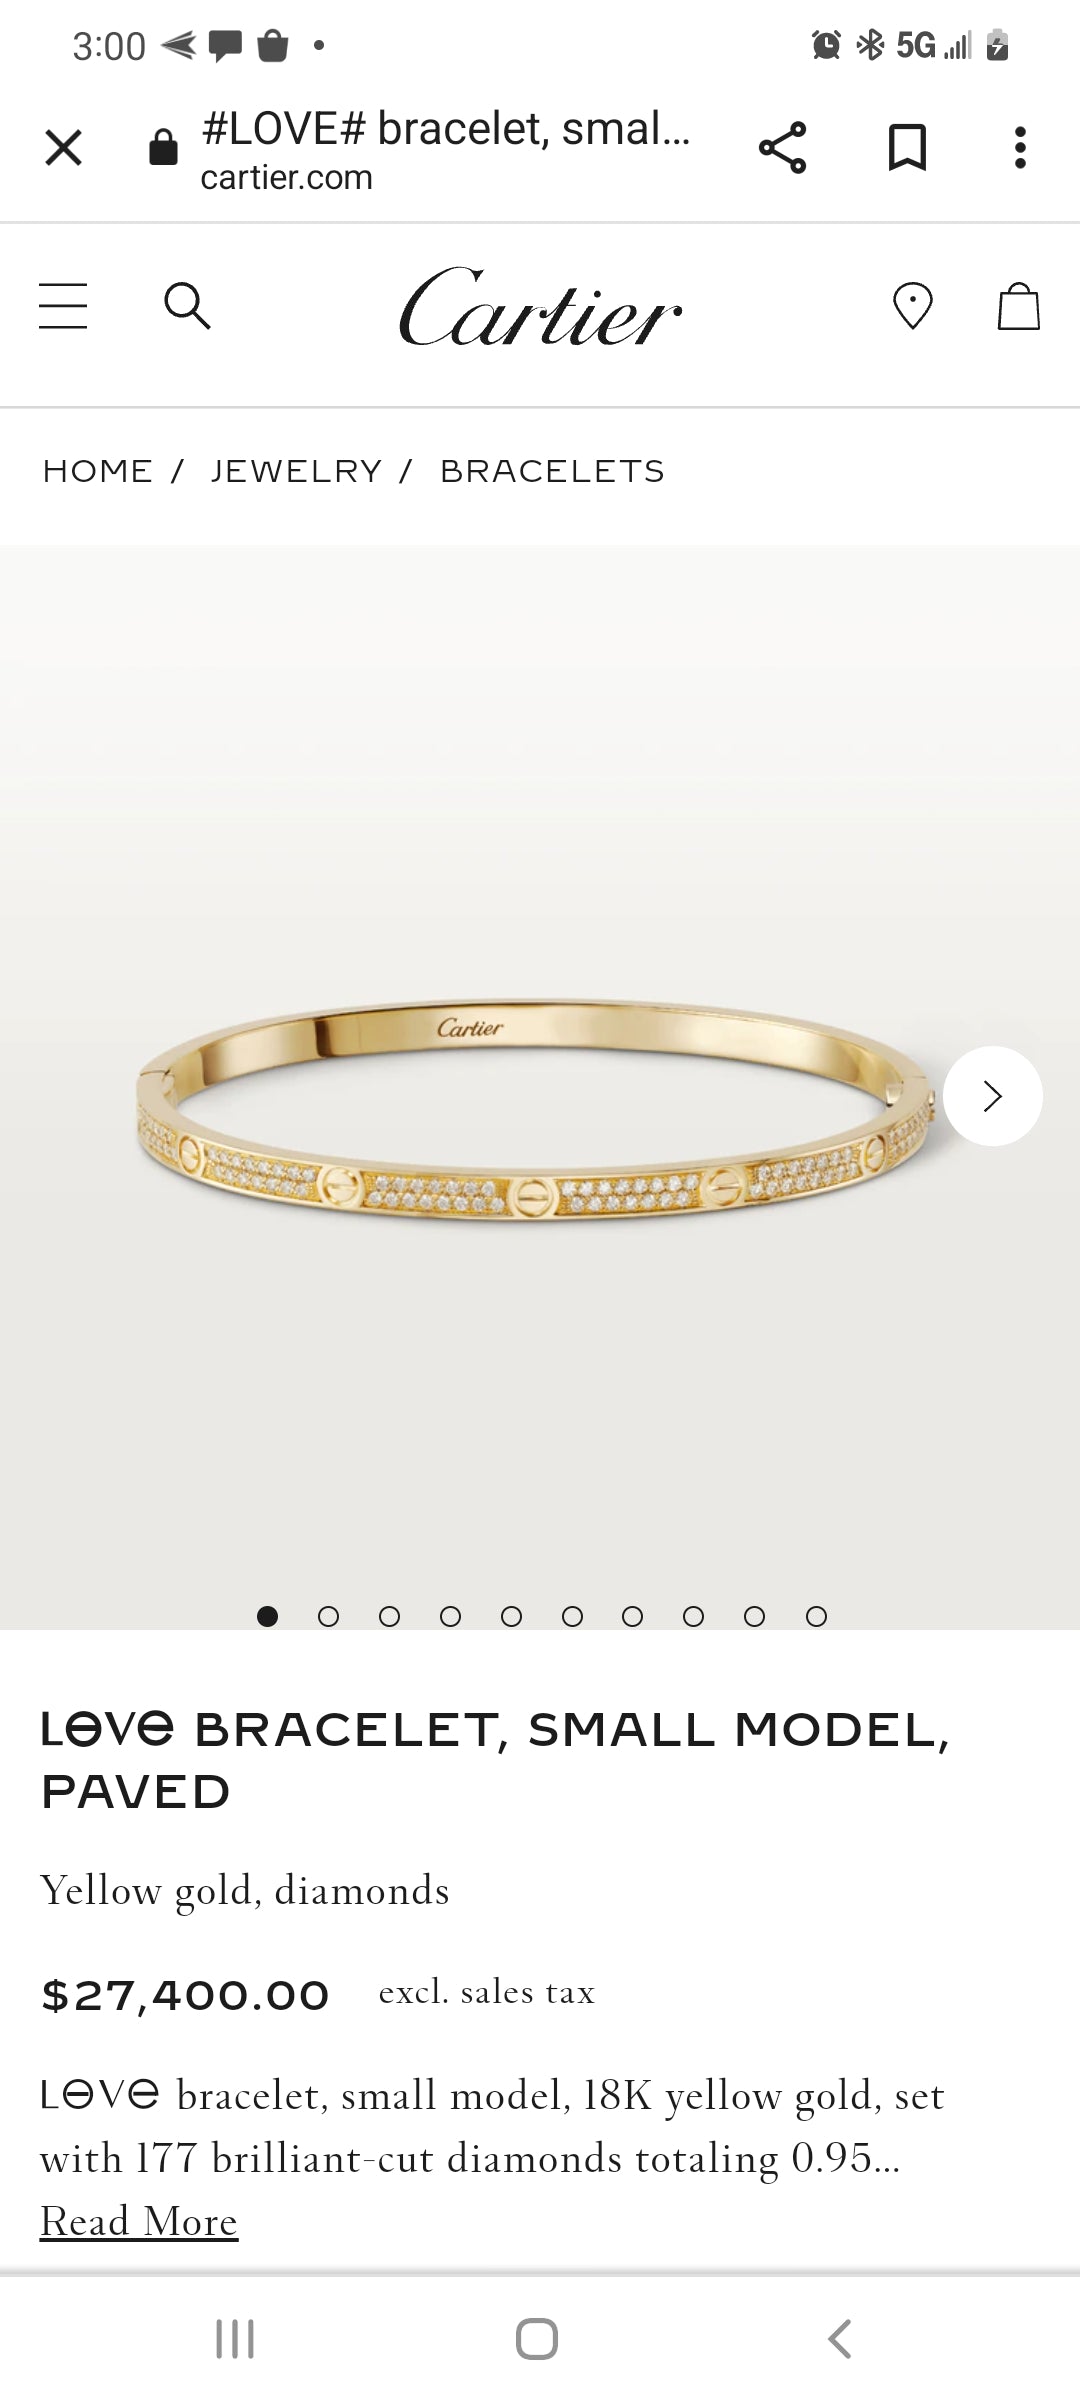 #LOVE# bracelet, small model